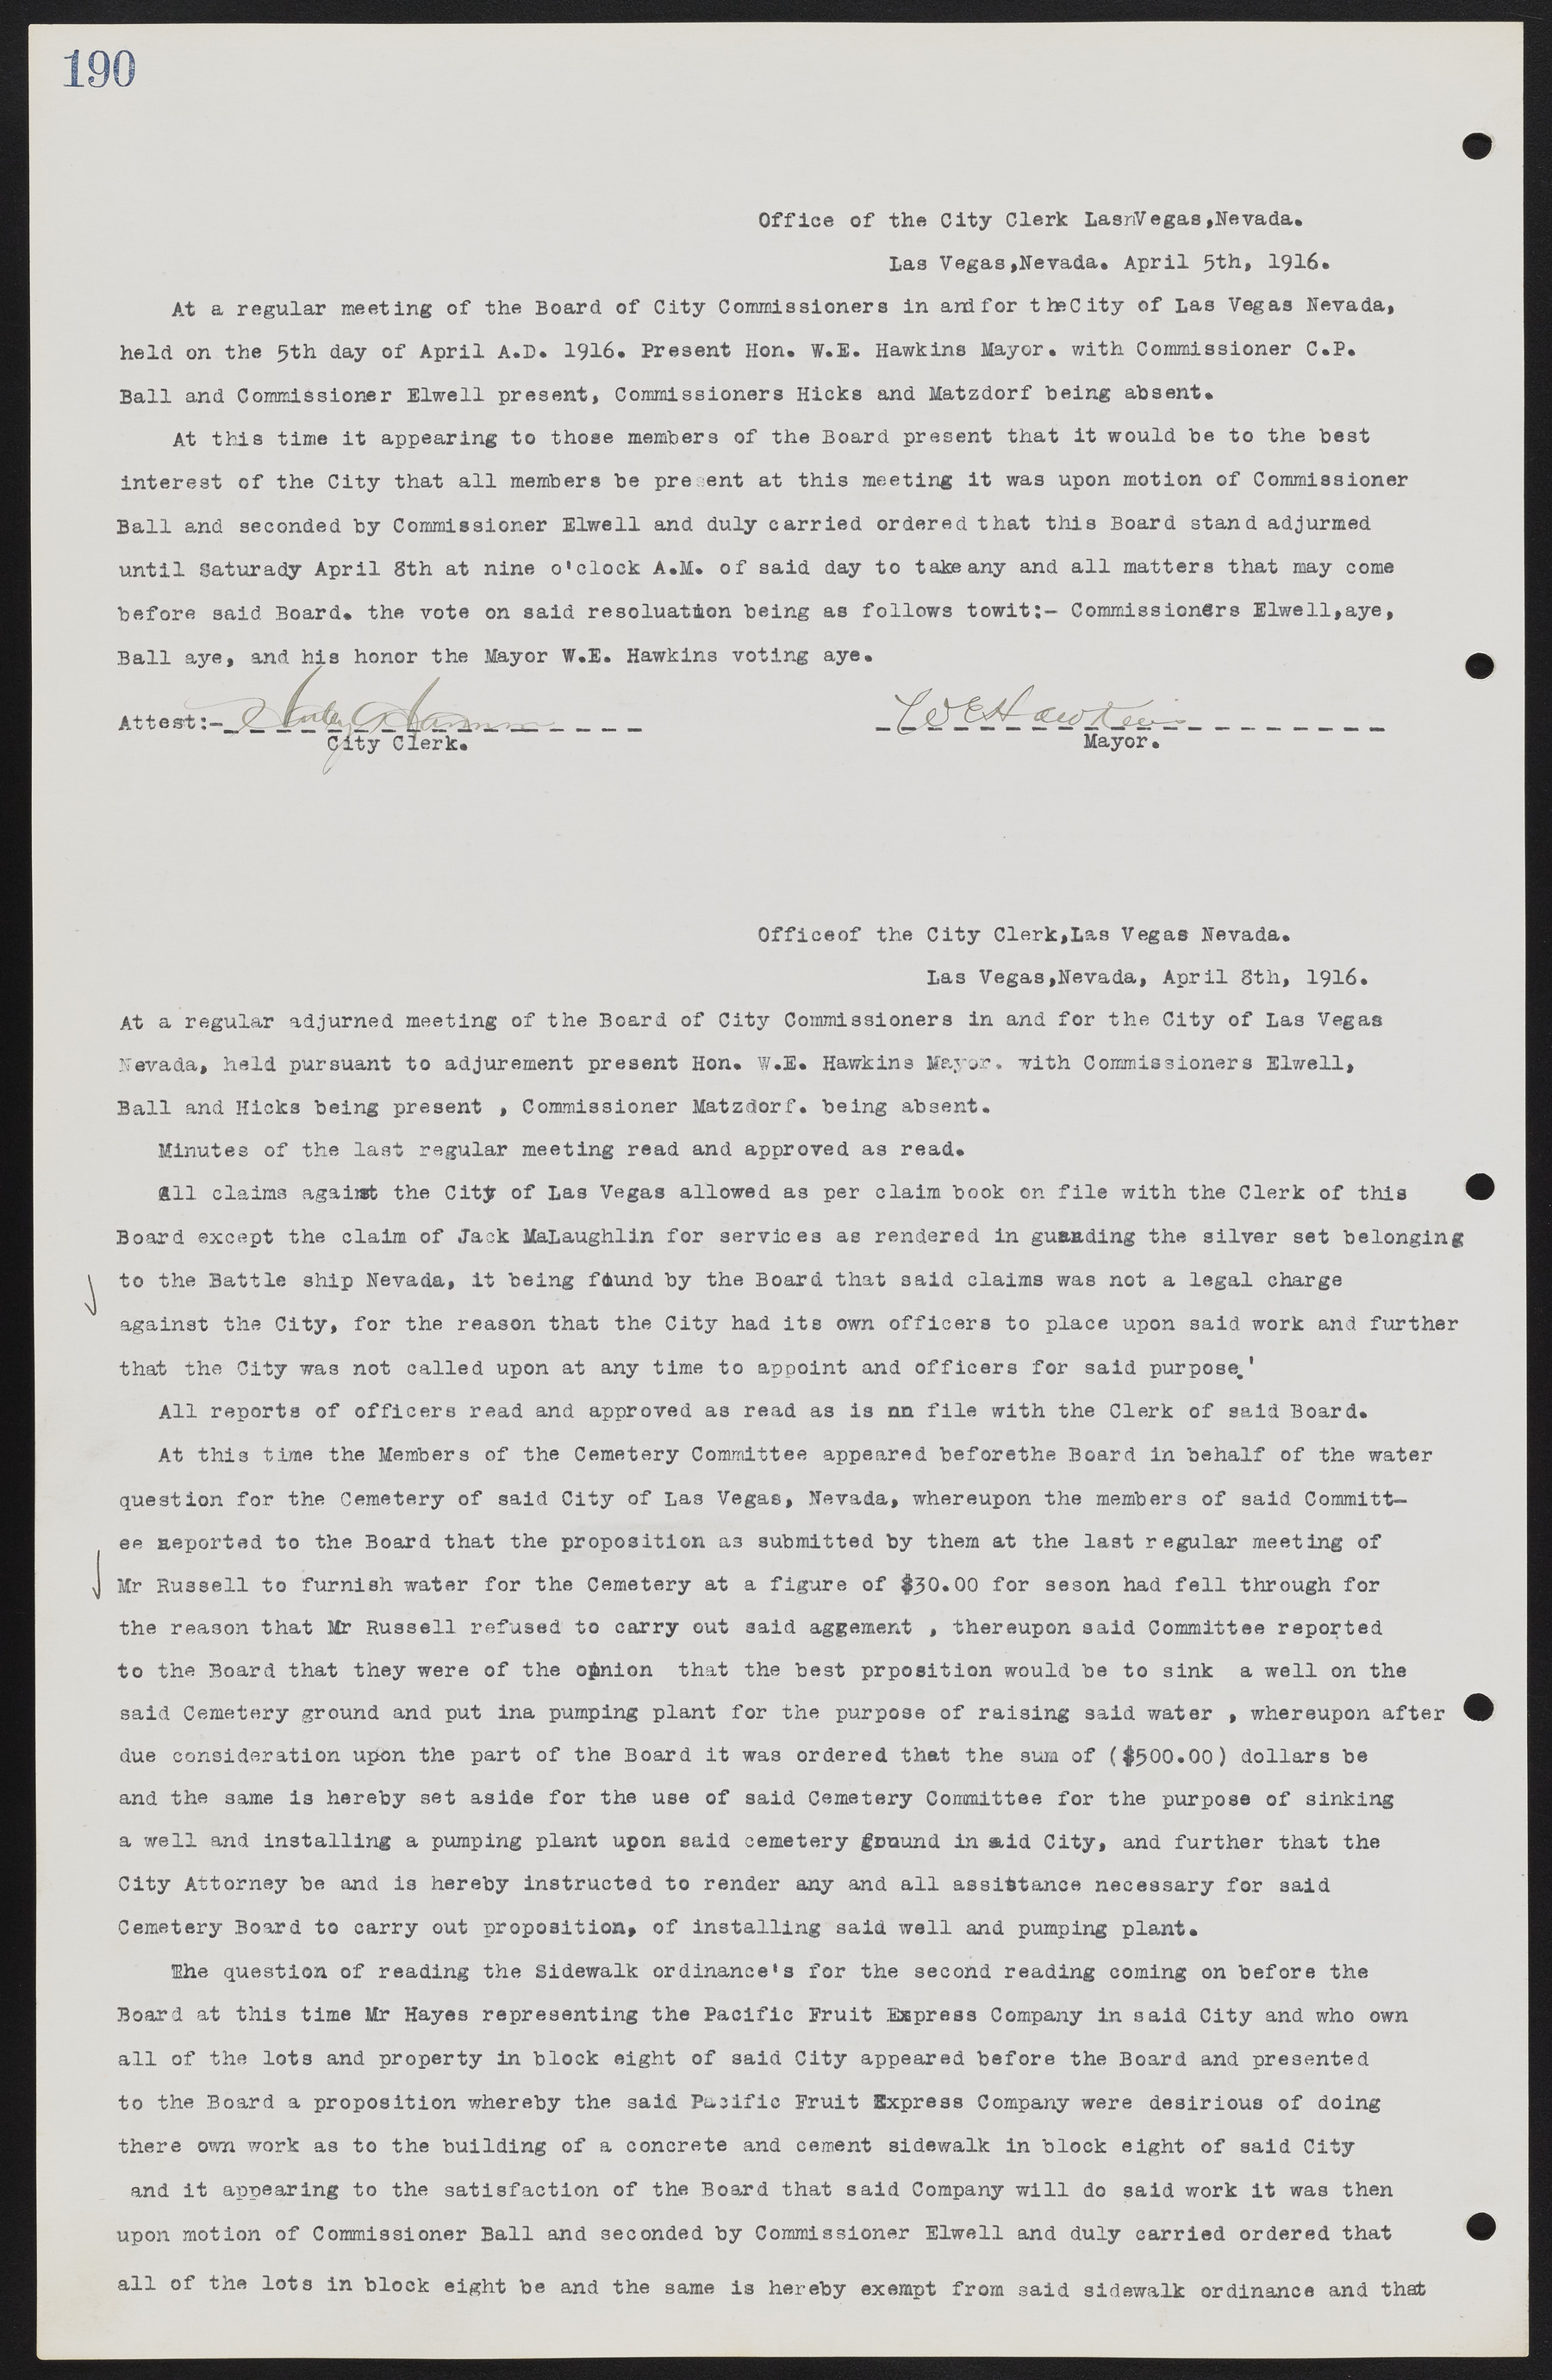 Las Vegas City Commission Minutes, June 22, 1911 to February 7, 1922, lvc000001-206